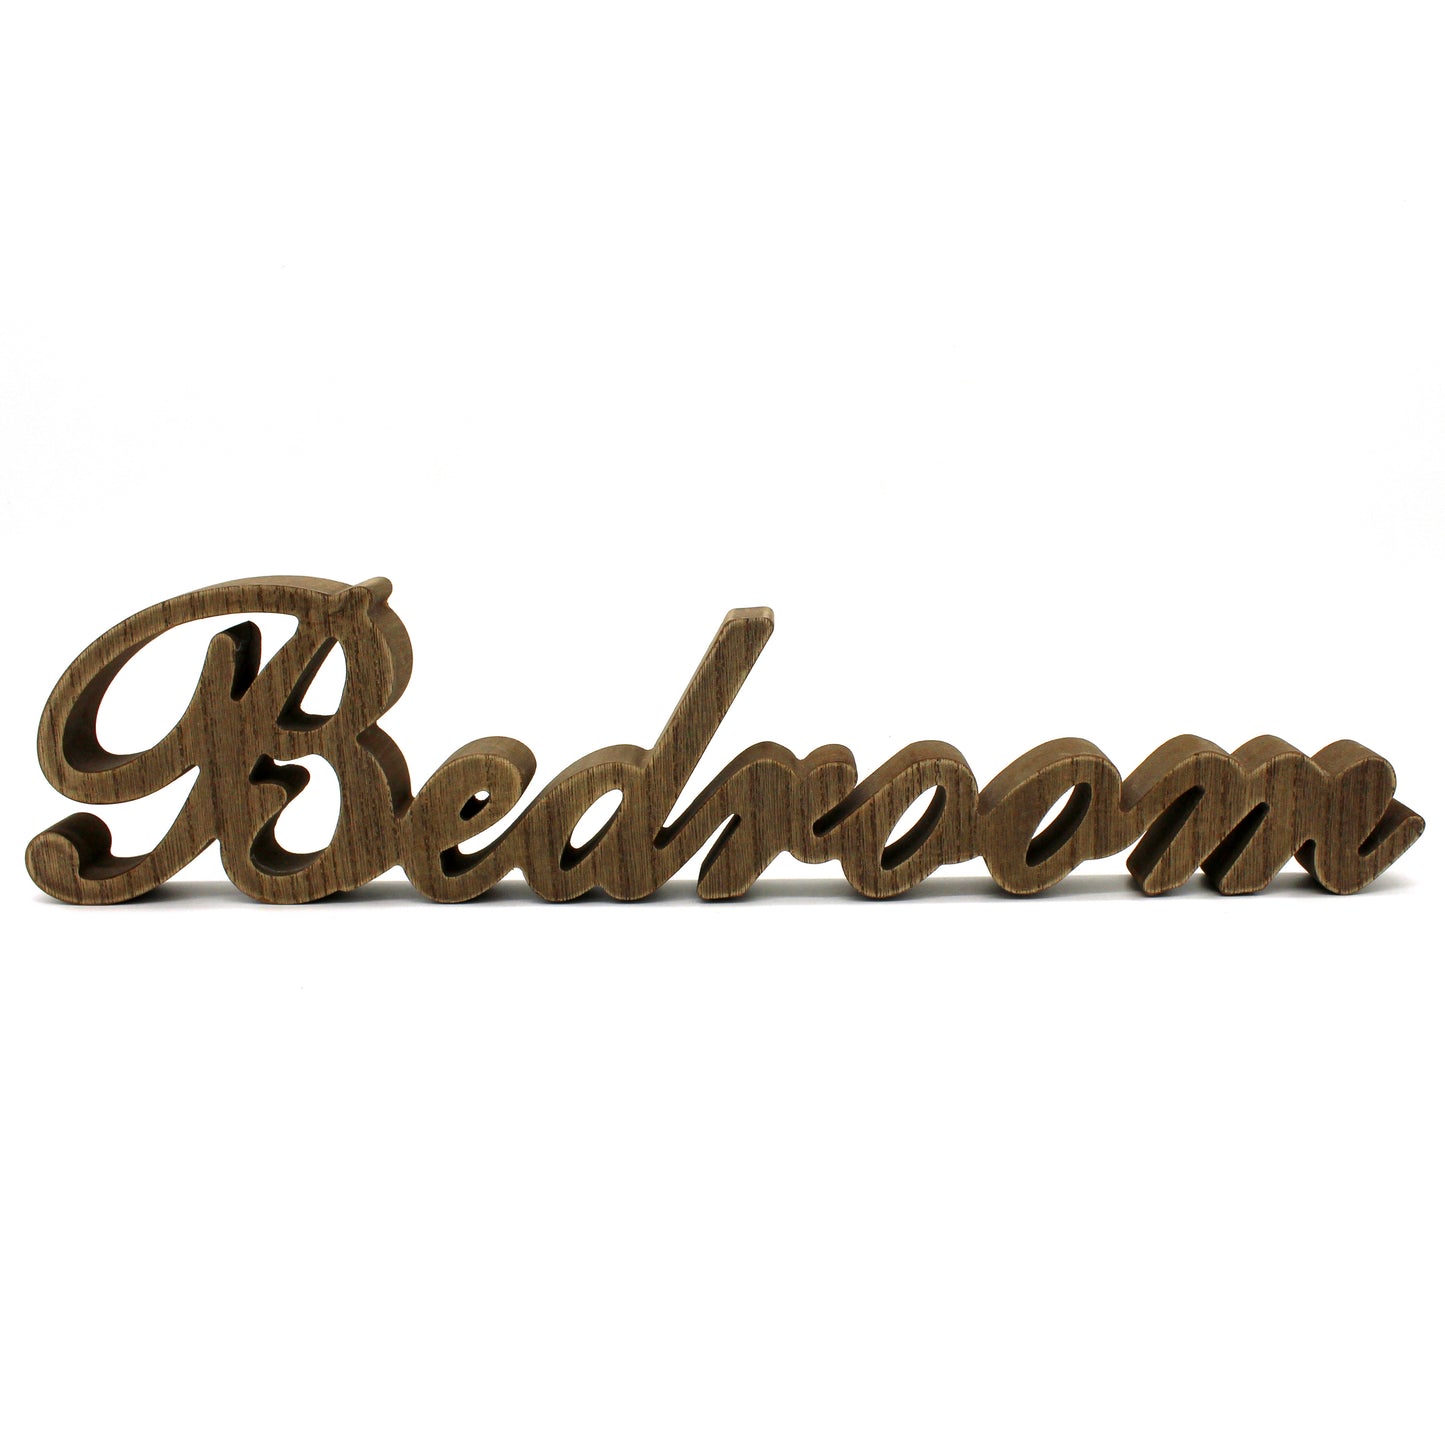 CVHOMEDECO. Rustic Vintage Distressed Wooden Words Sign Free Standing "Bedroom" Desk/Table/Shelf/Door/Home Wall Decoration Art, 18.5 x 4.25 x 1 Inch